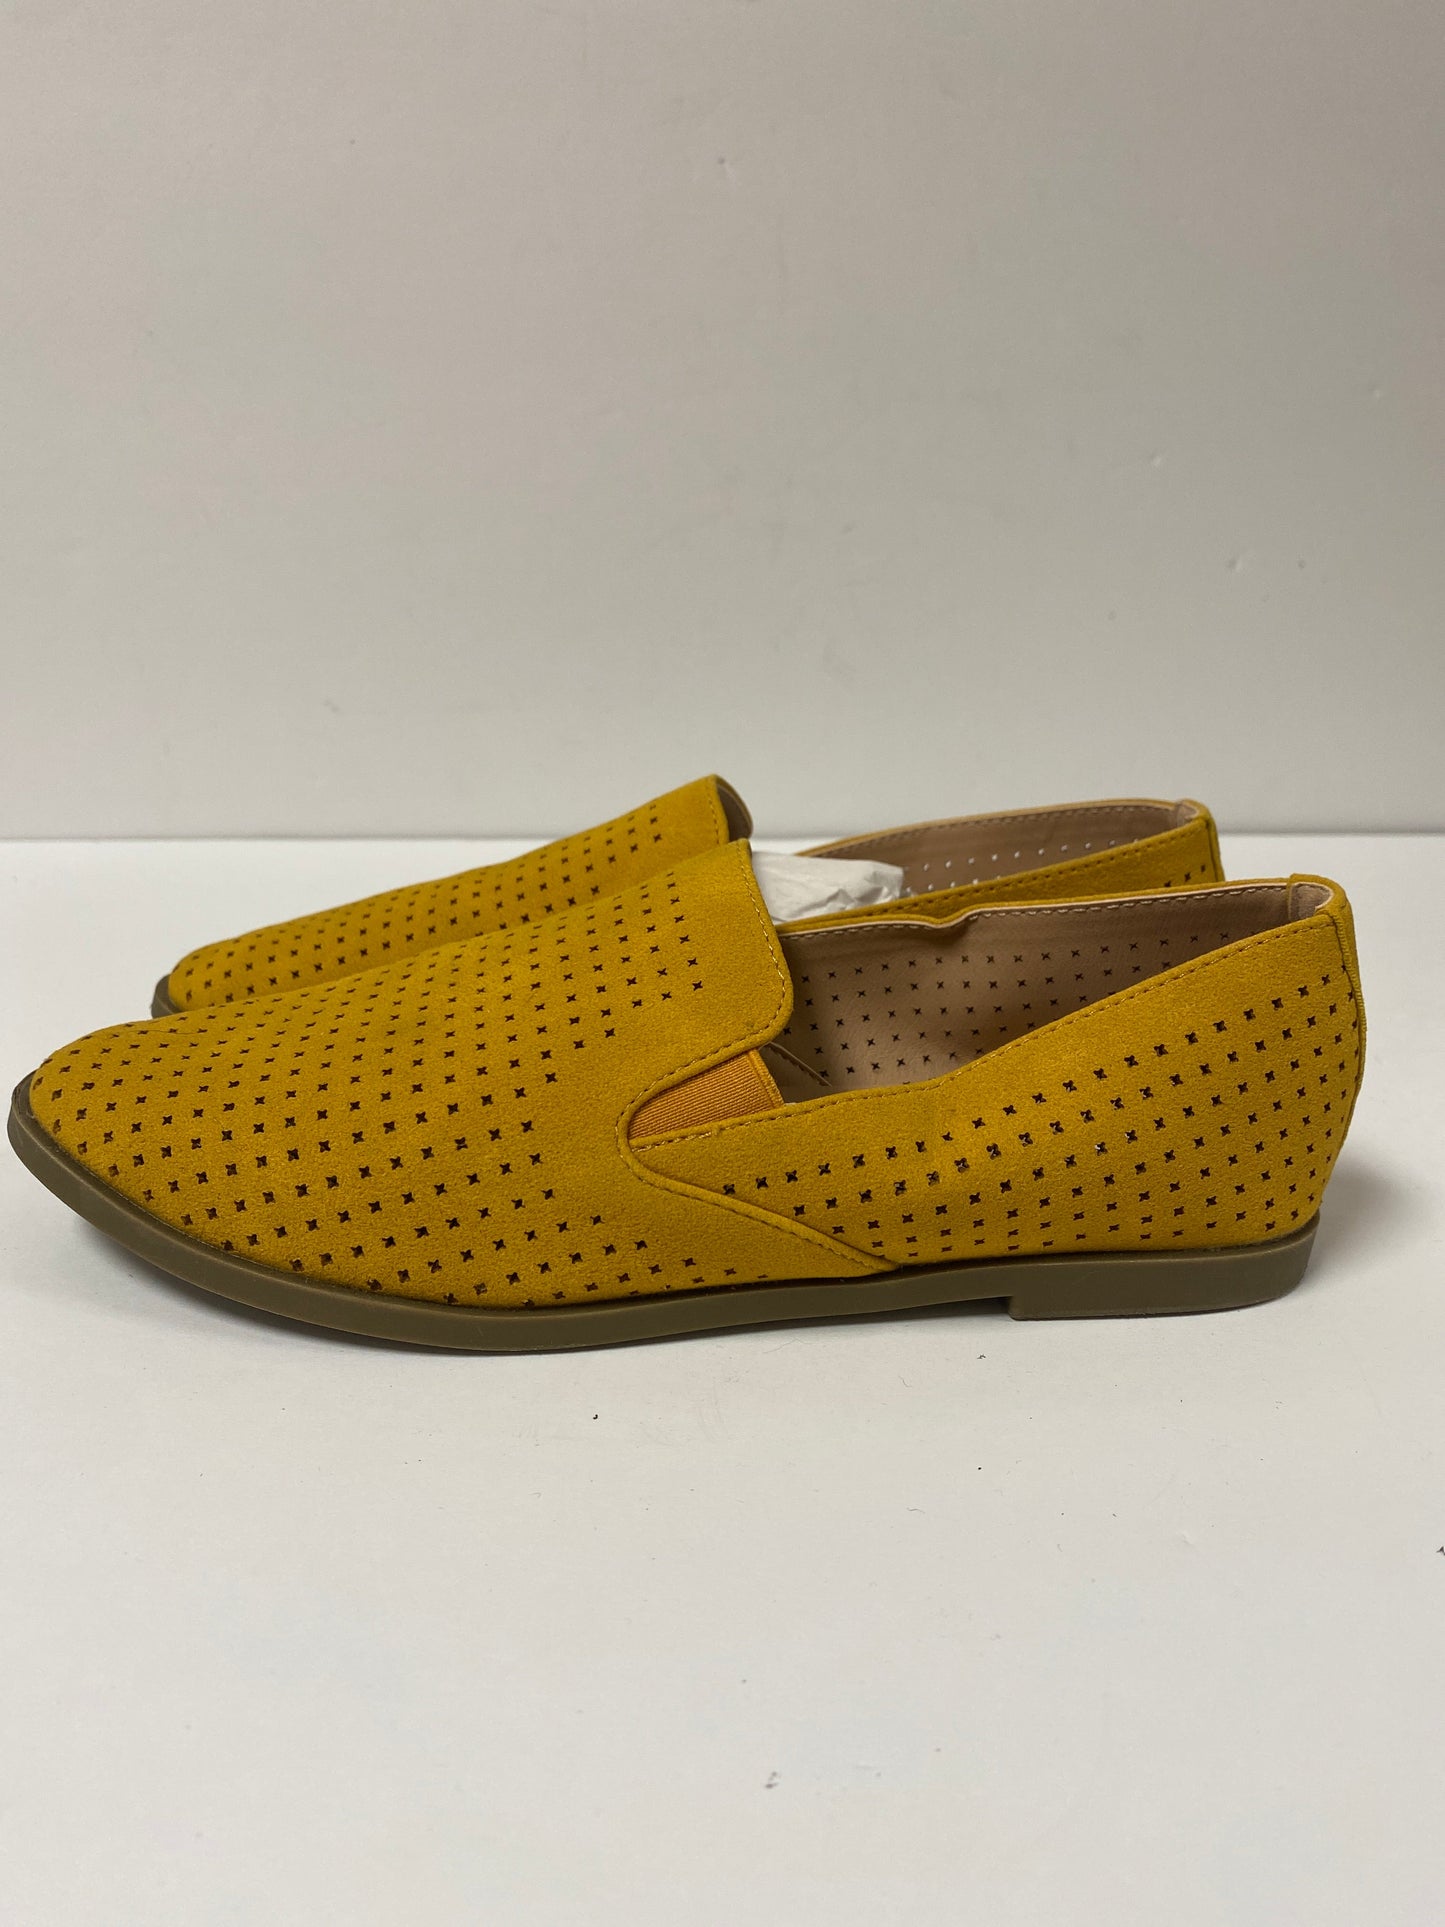 Shoes Flats Mule & Slide By Cmc  Size: 6